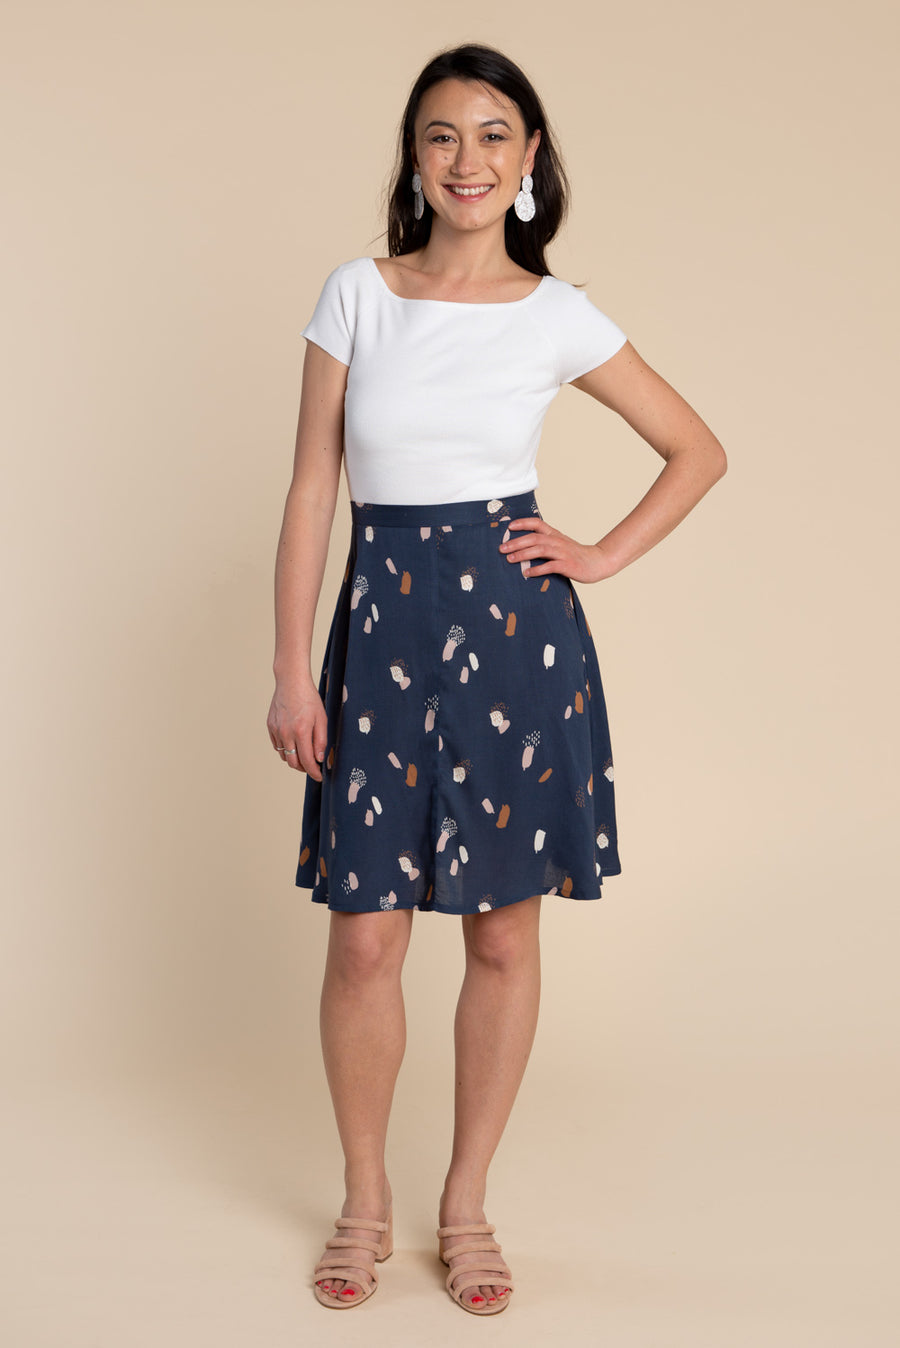 Skirt fabric, Dressmaking skirt fabrics UK